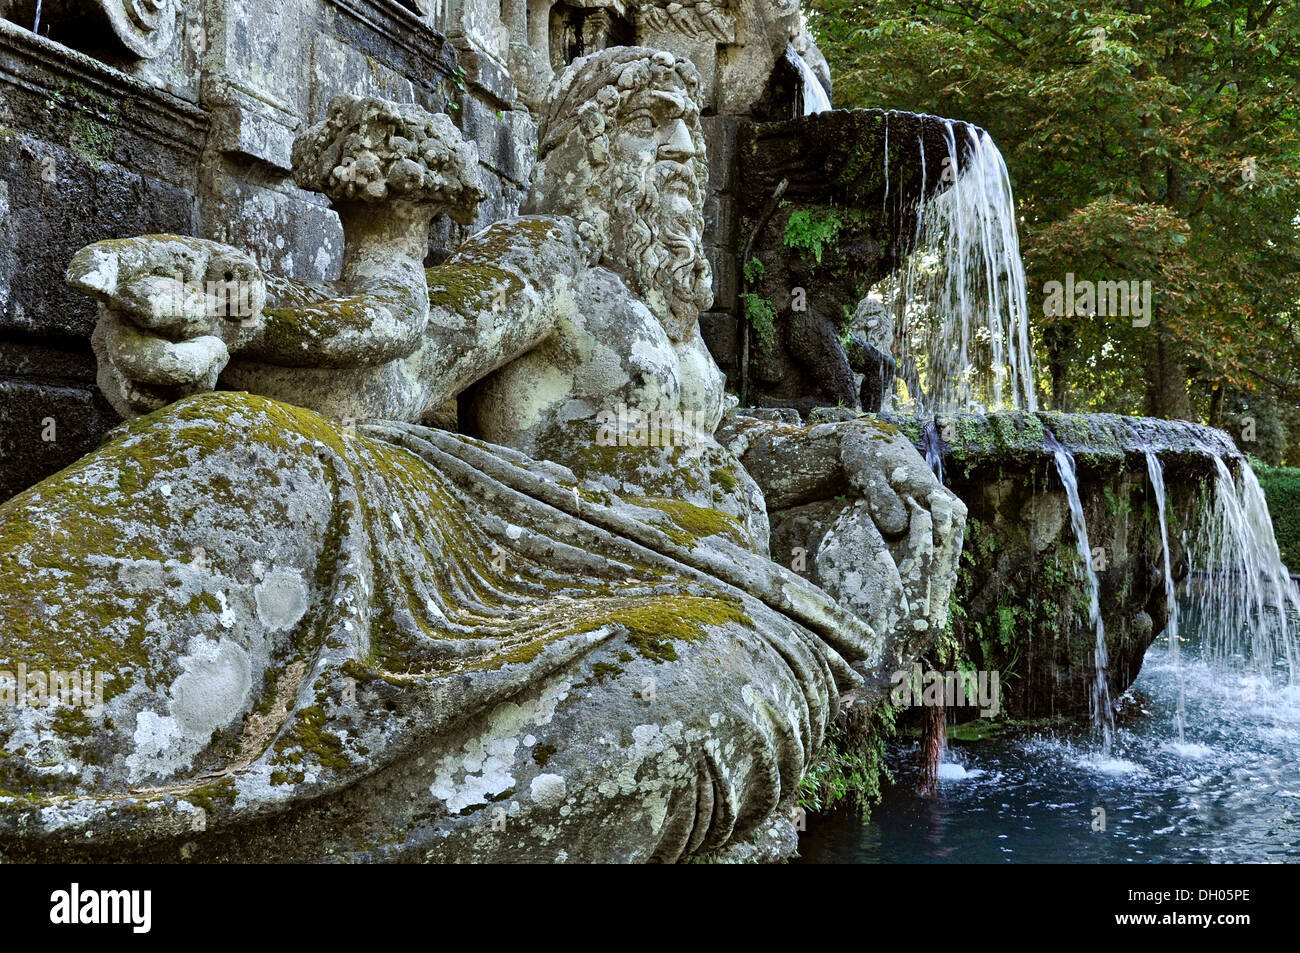 Fontana dei Giganti or Fountain of the Giants, river god of the Tiber River, gardens of Villa Lante, Bagnaia, Lazio, Italy Stock Photo